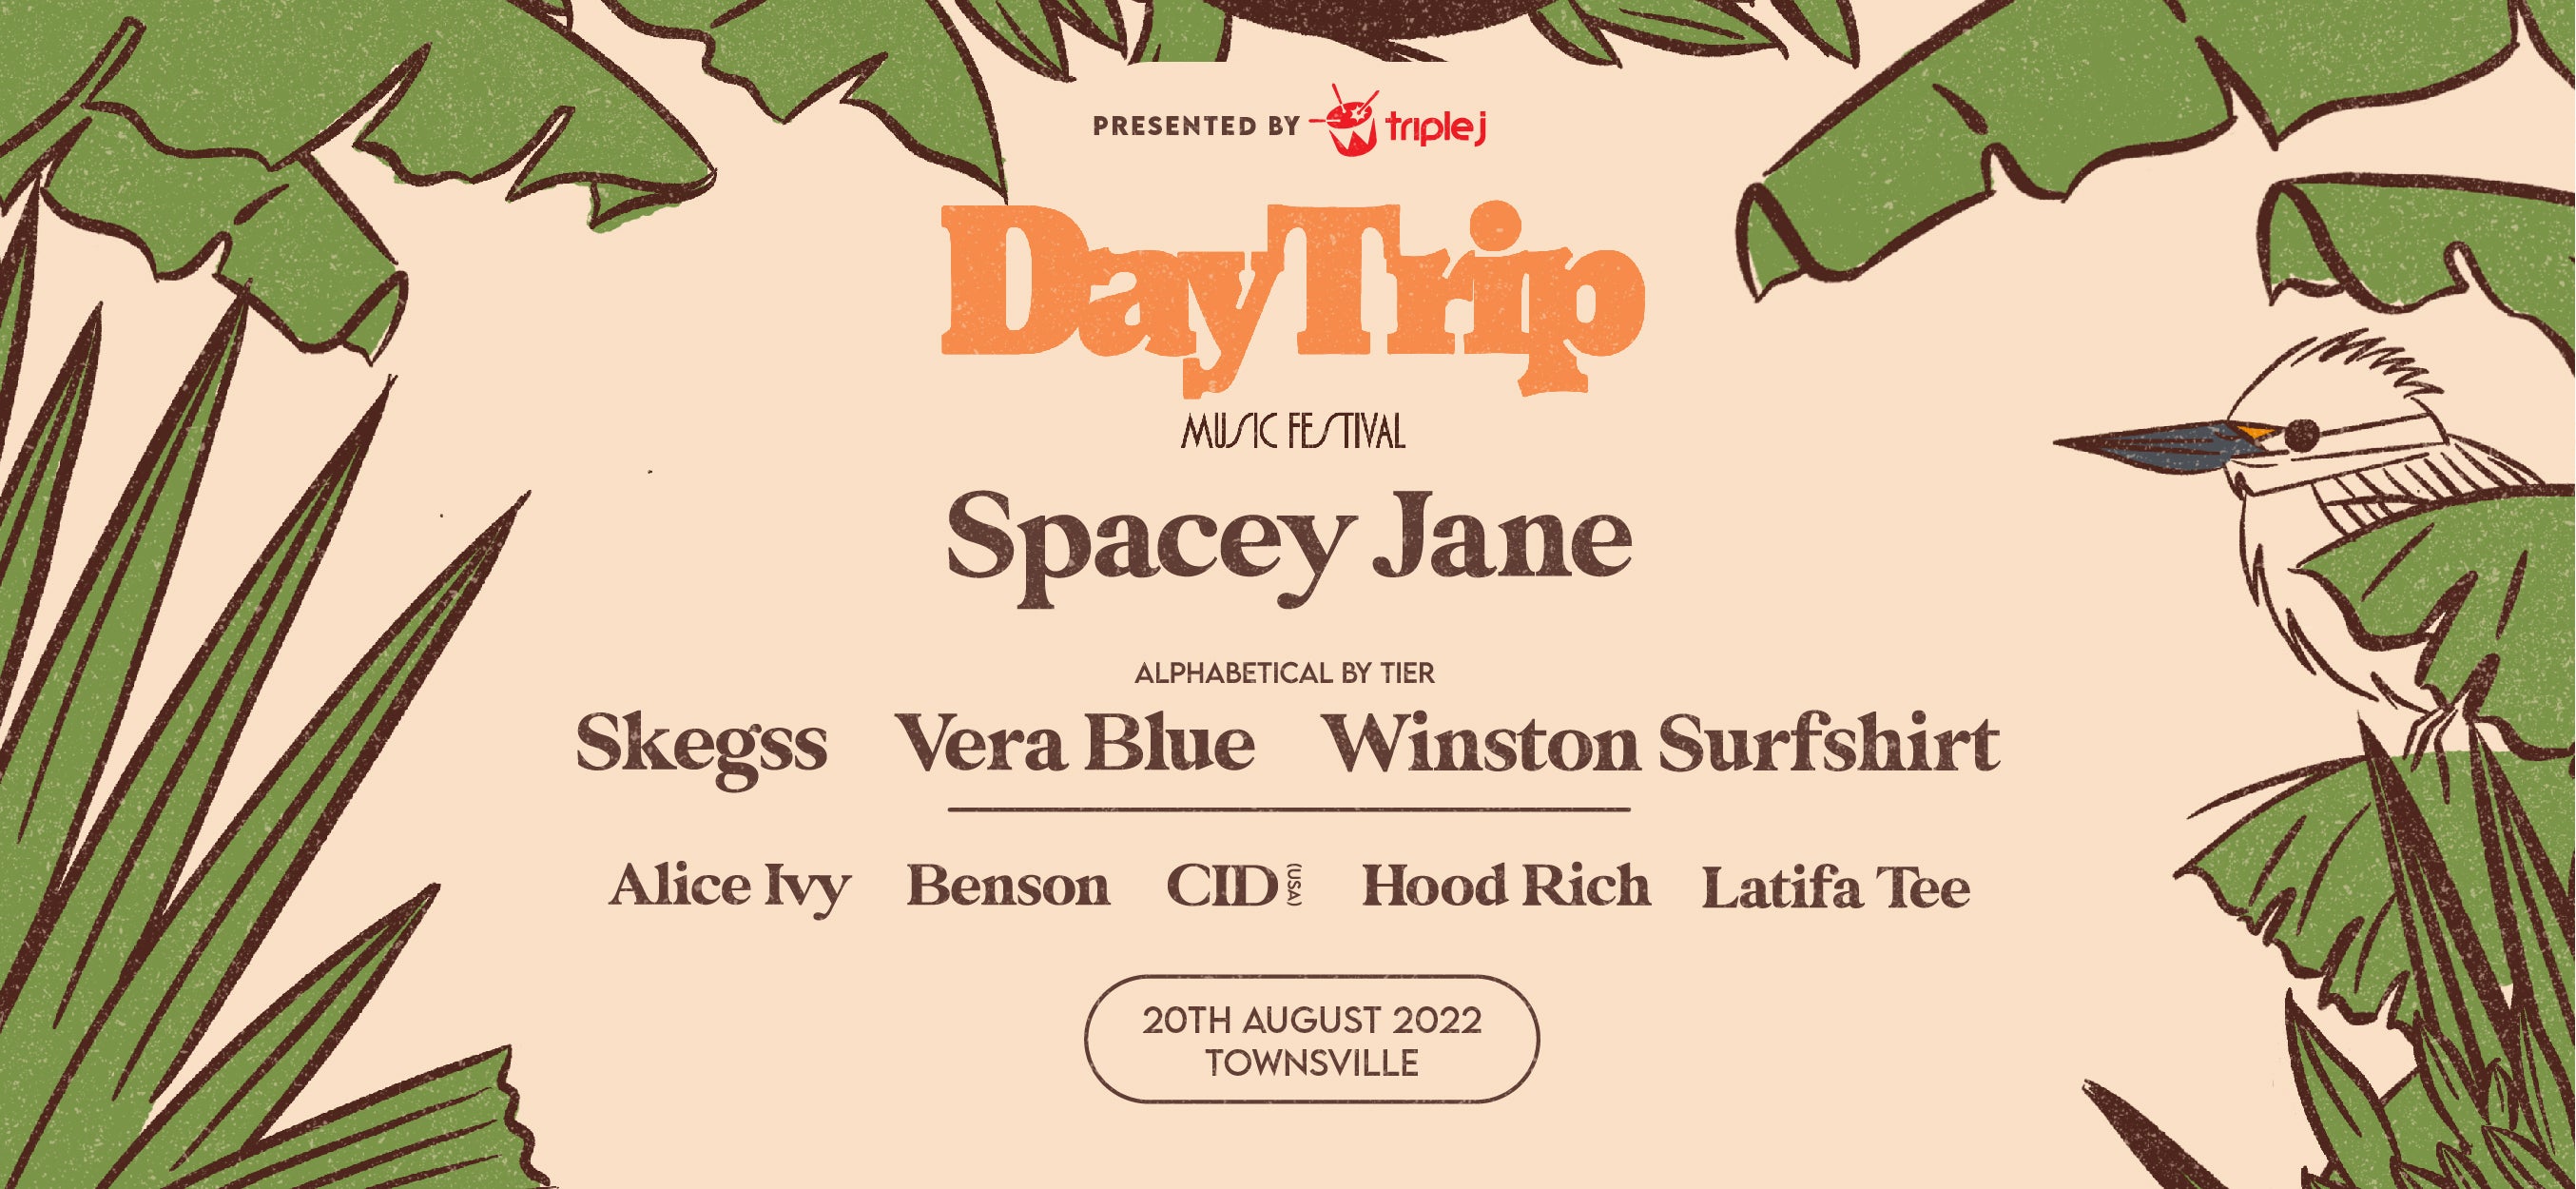 Day Trip Music Festival 2022